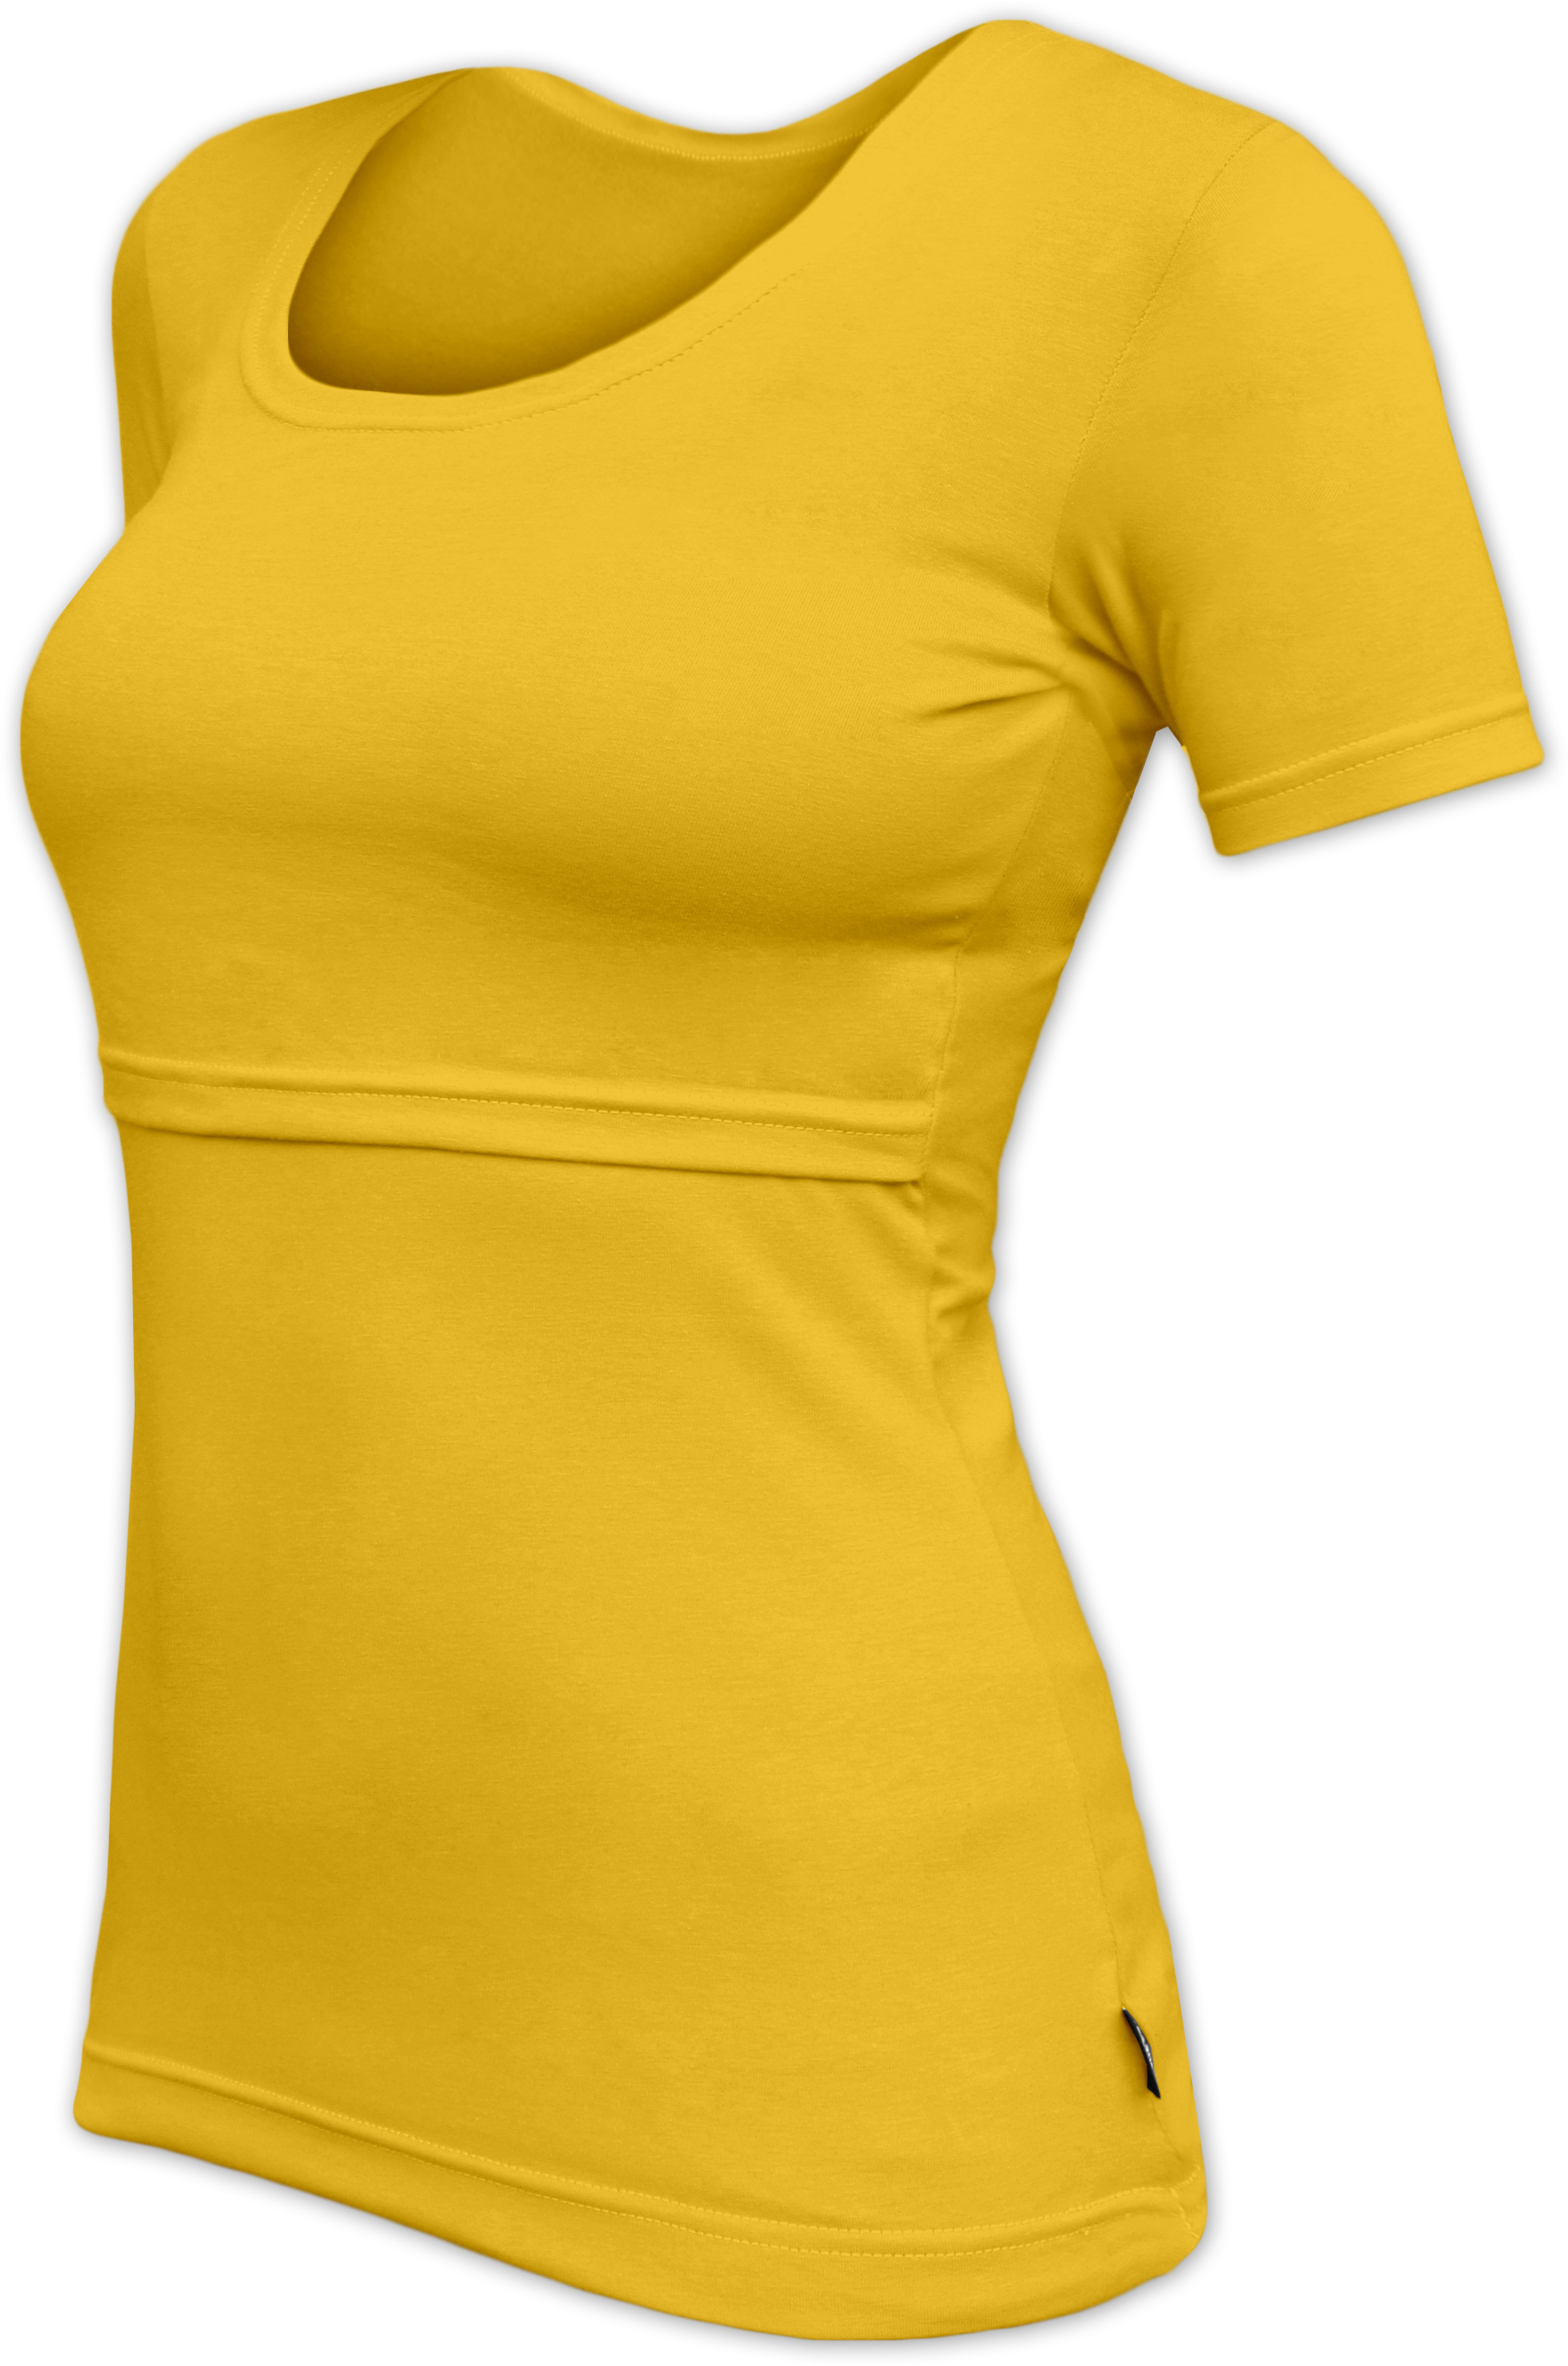 KATERINA- breast-feeding T-shirt 04, short sleeves, YELLOW-ORANGE S/M